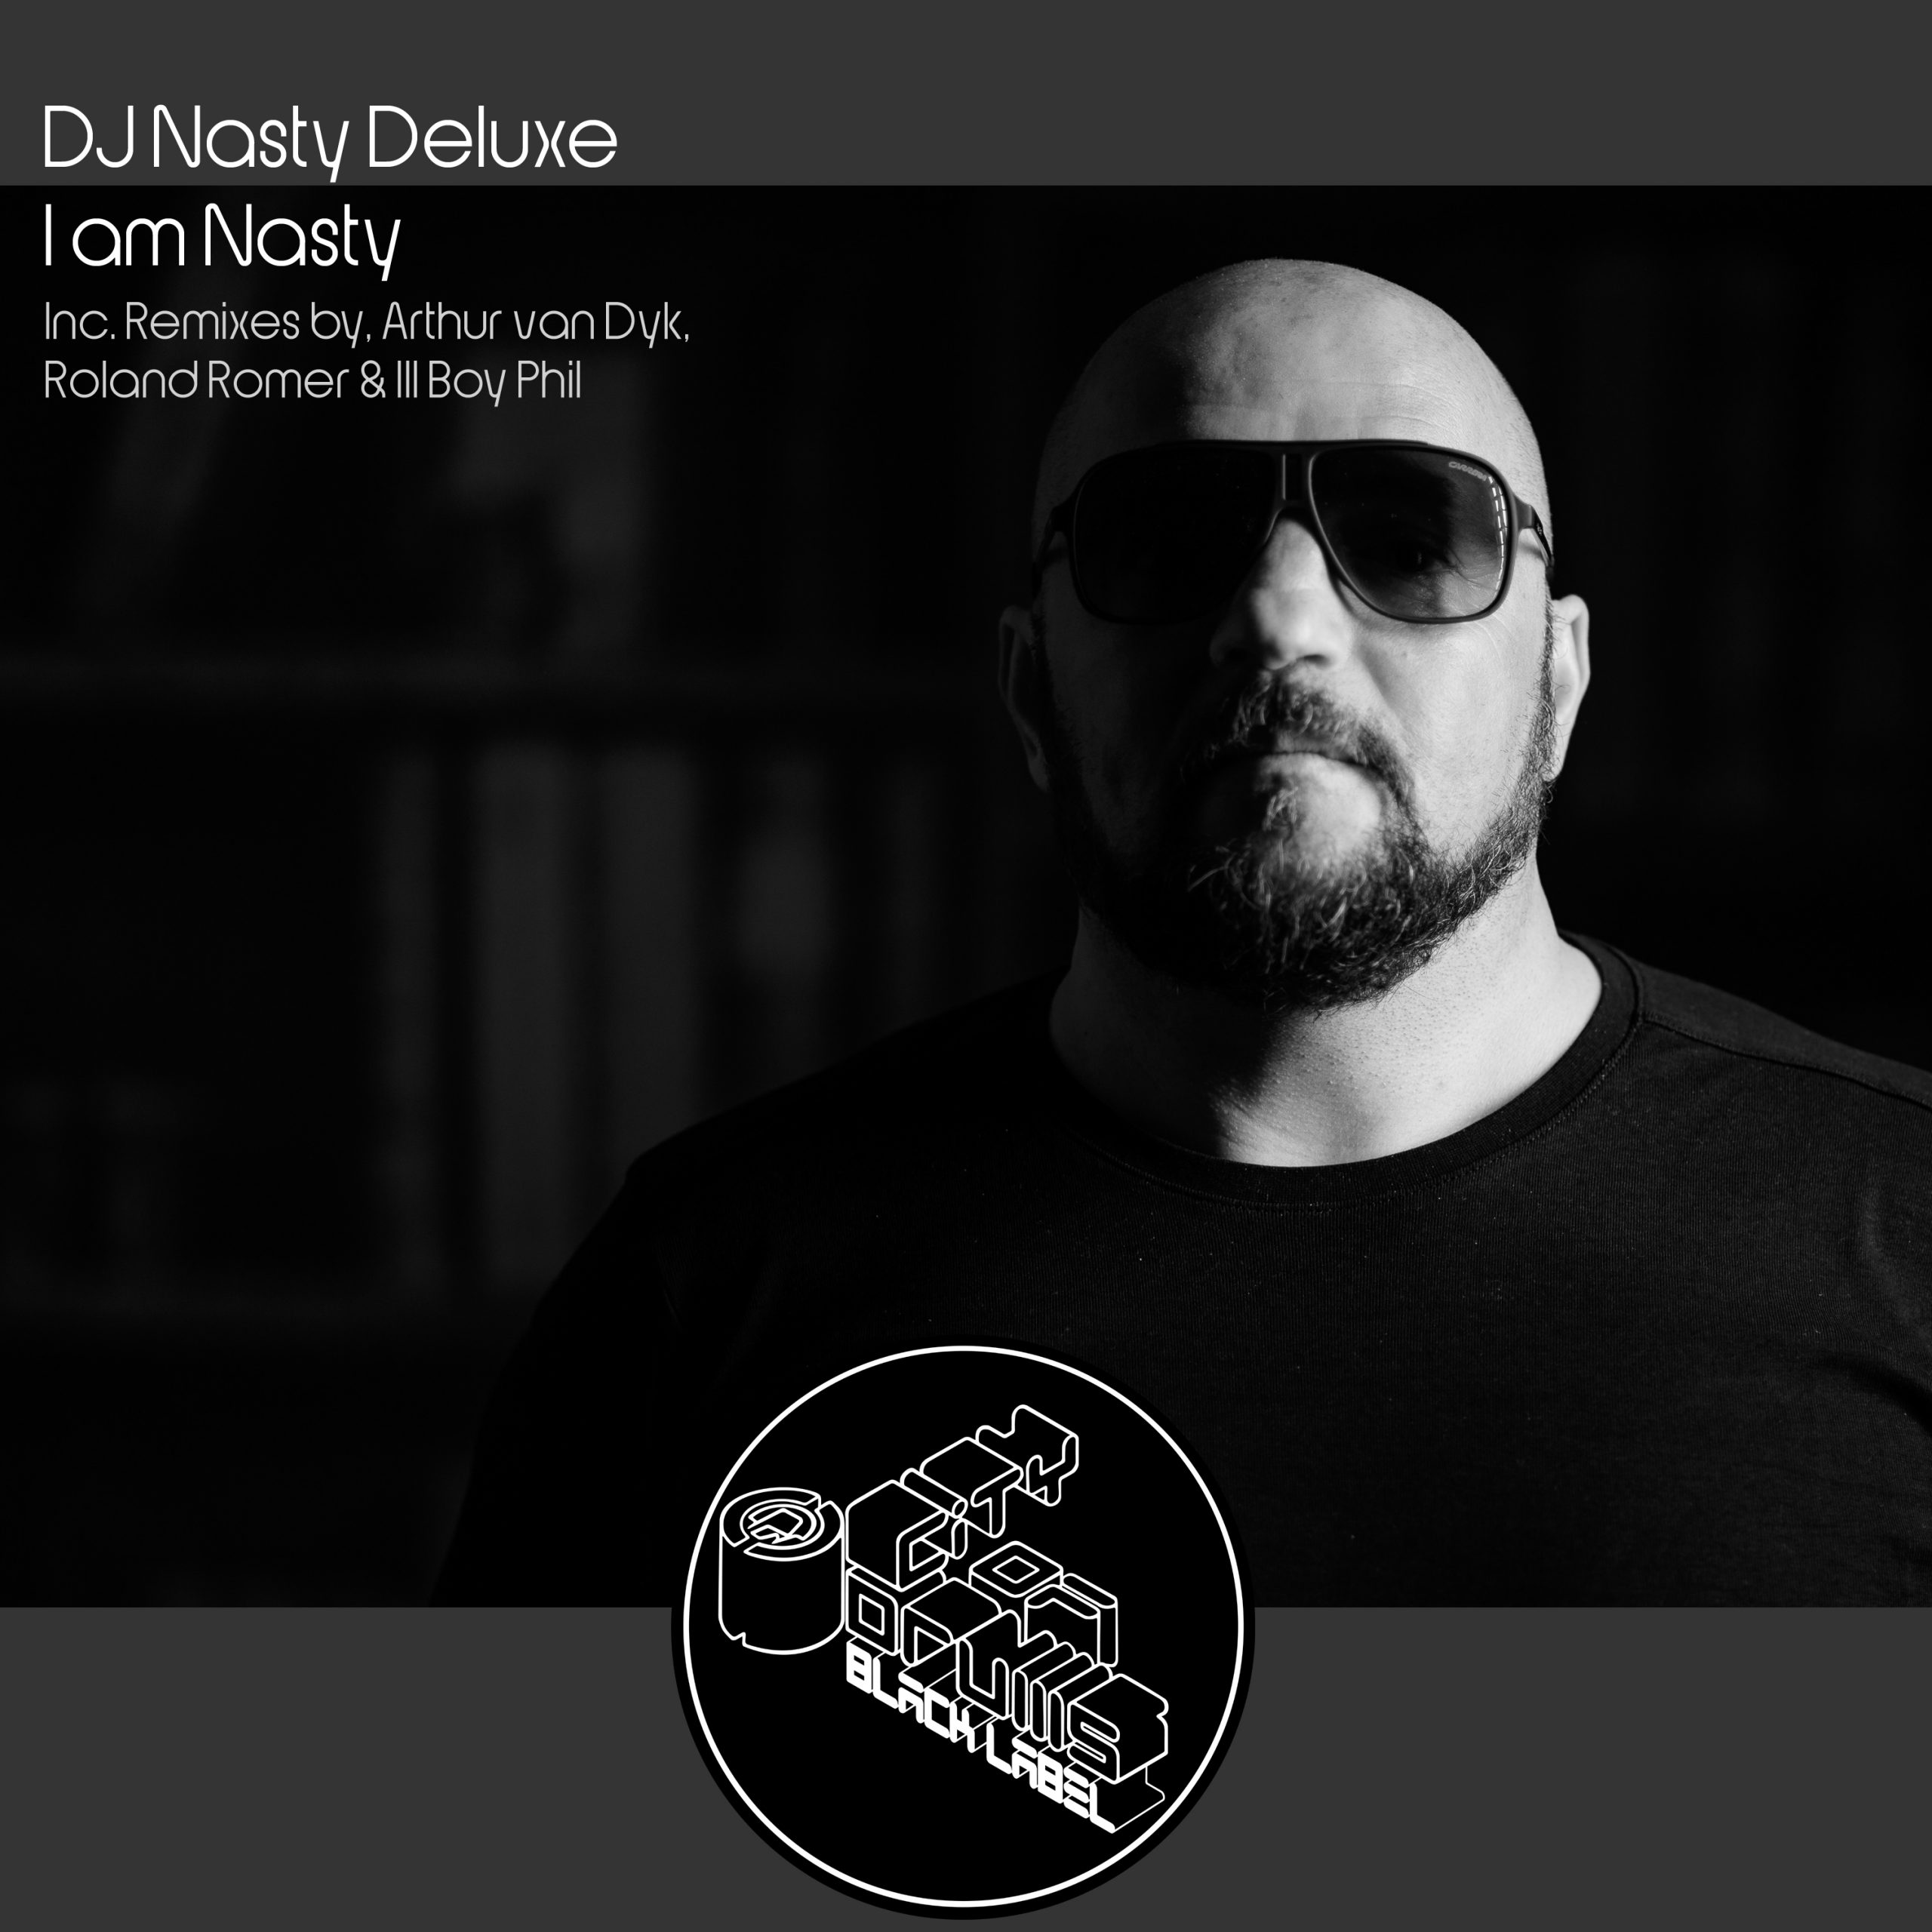 OUT NOW!!! I am Nasty von DJ Nasty Deluxe! 3